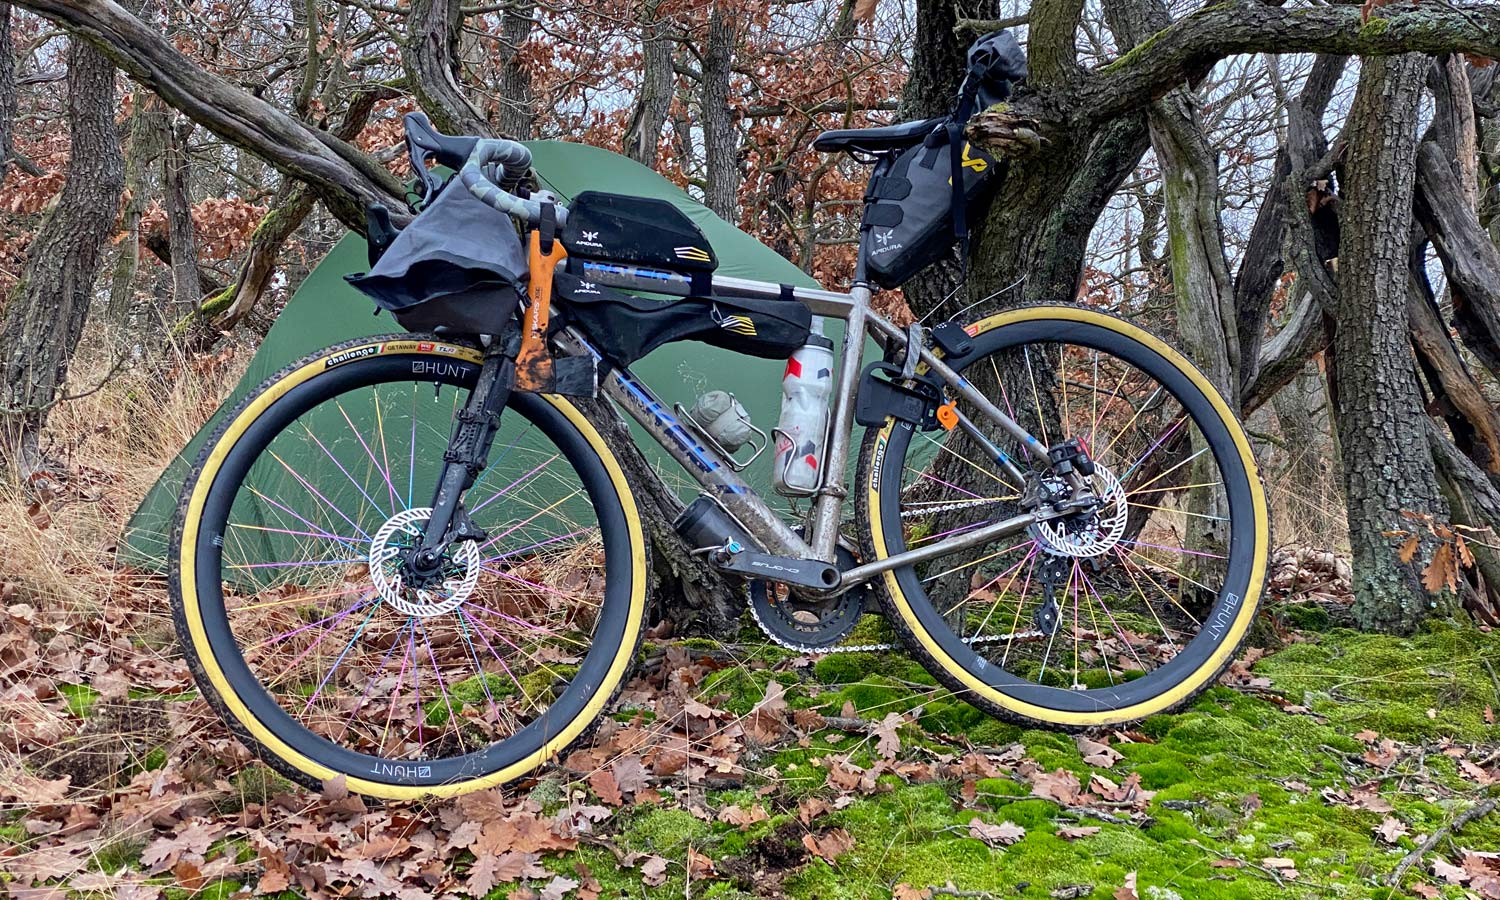 All-new 40mm Challenge Getaway handmade tubeless gravel tires, bikepacking camp